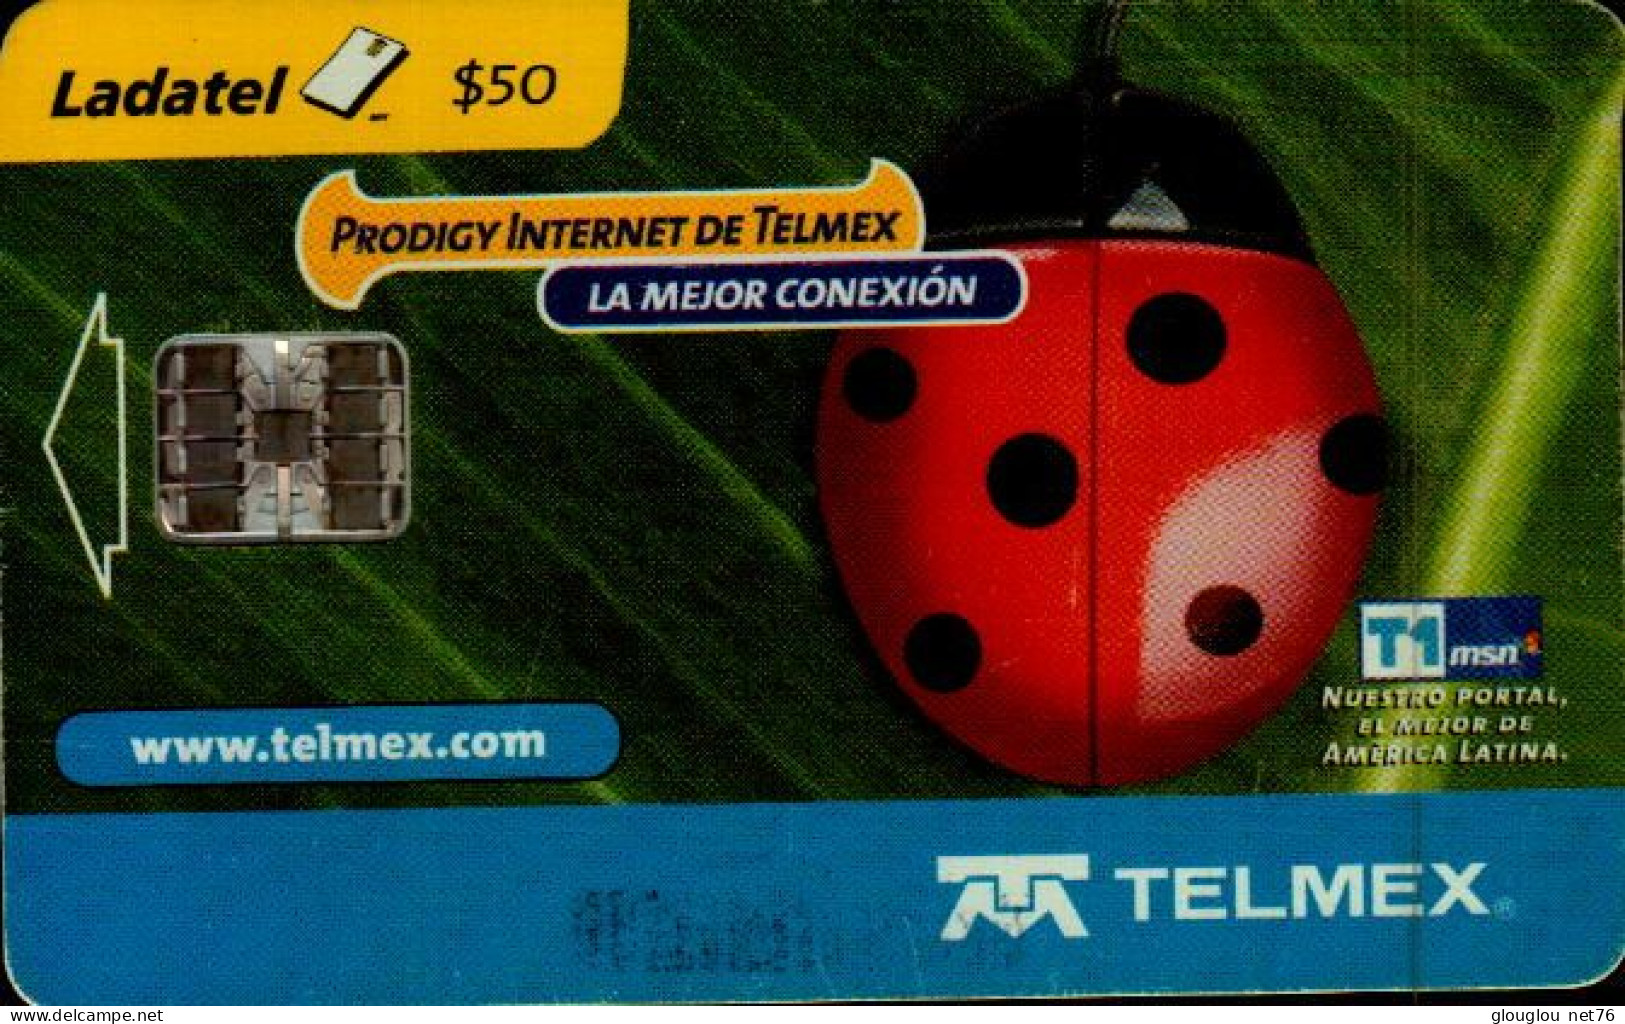 TELECARTE ETRANGERE...COCCINELLE - Ladybugs